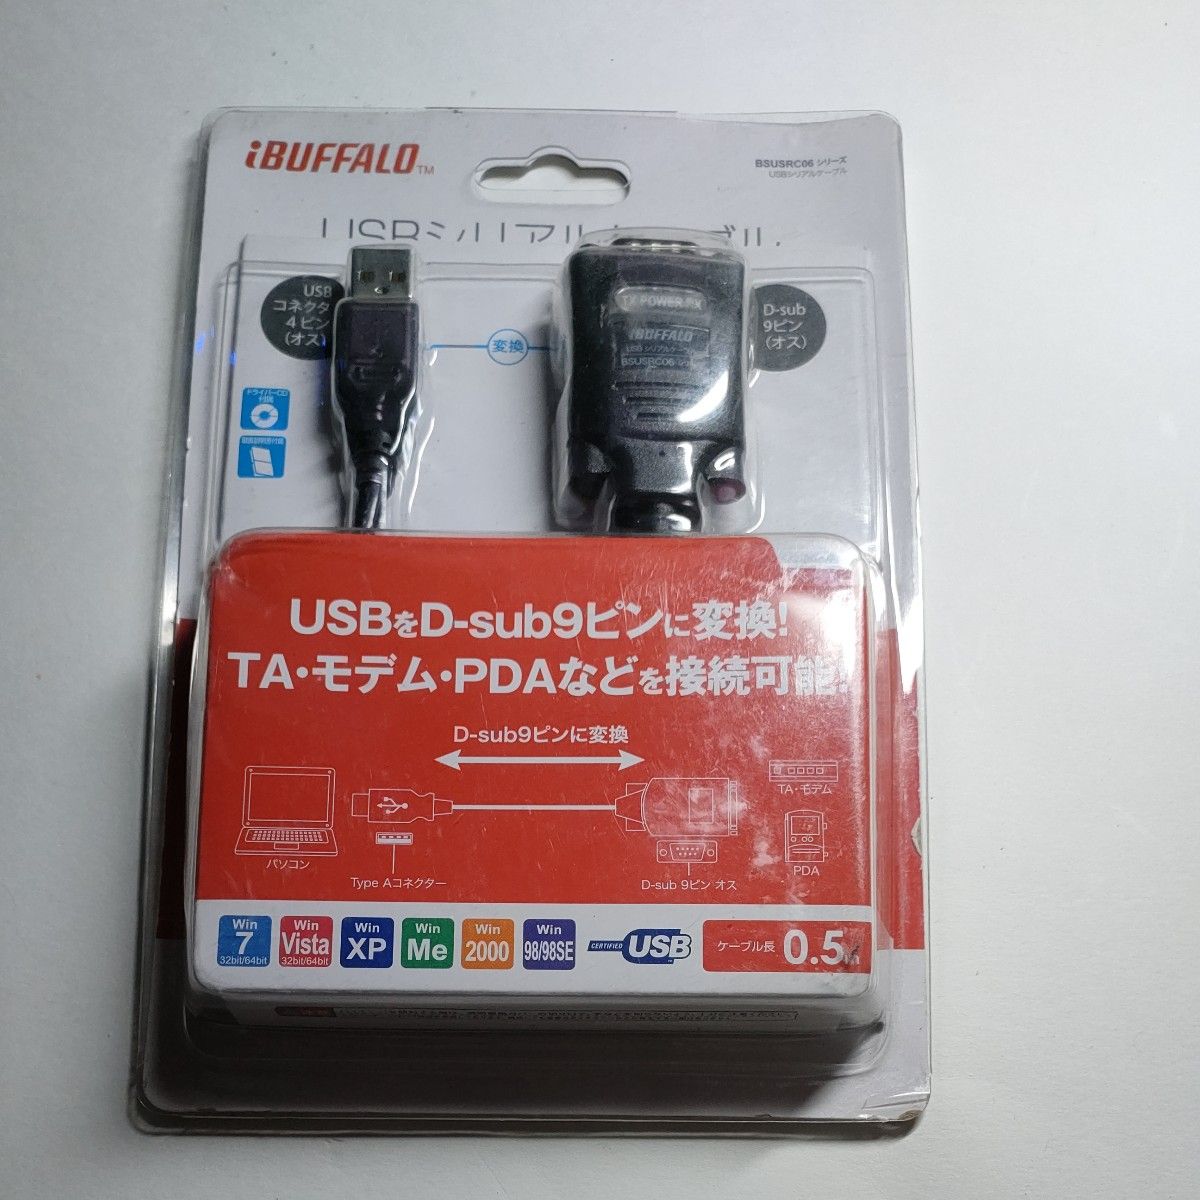 iBUFFALO USBシリアルケーブル (USBtypeA to D-sub9ピン) 0.5m ブラックスケルトン